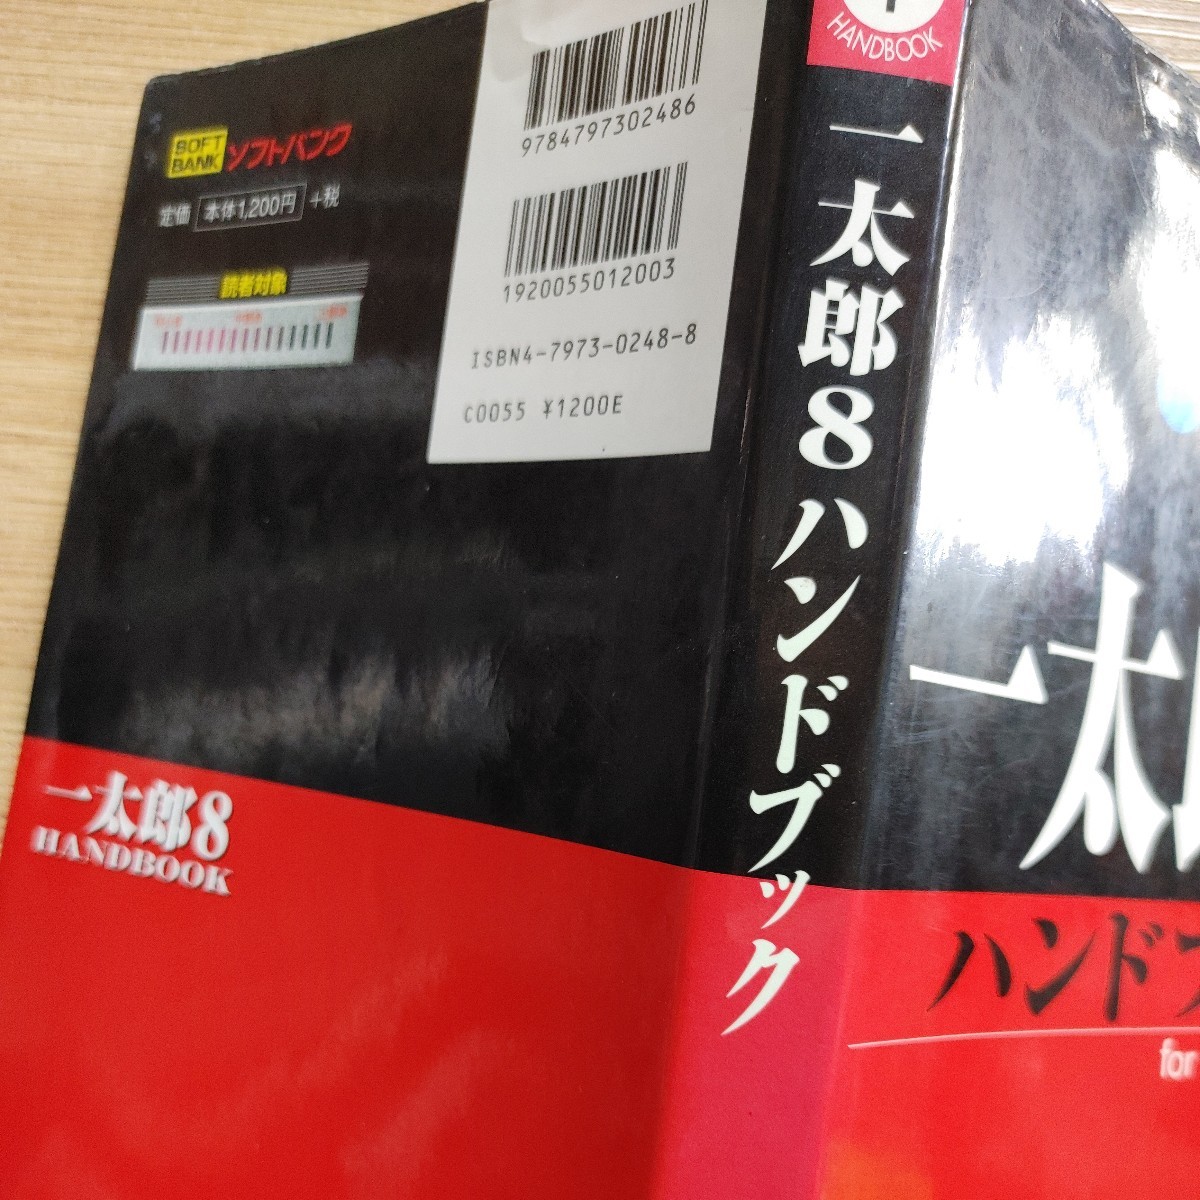 [ secondhand book .] one Taro 8 hand book For Windows 95 NT SBklieitib/... one ( separate volume ) ISBN4-7973-0248-8 SoftBank 